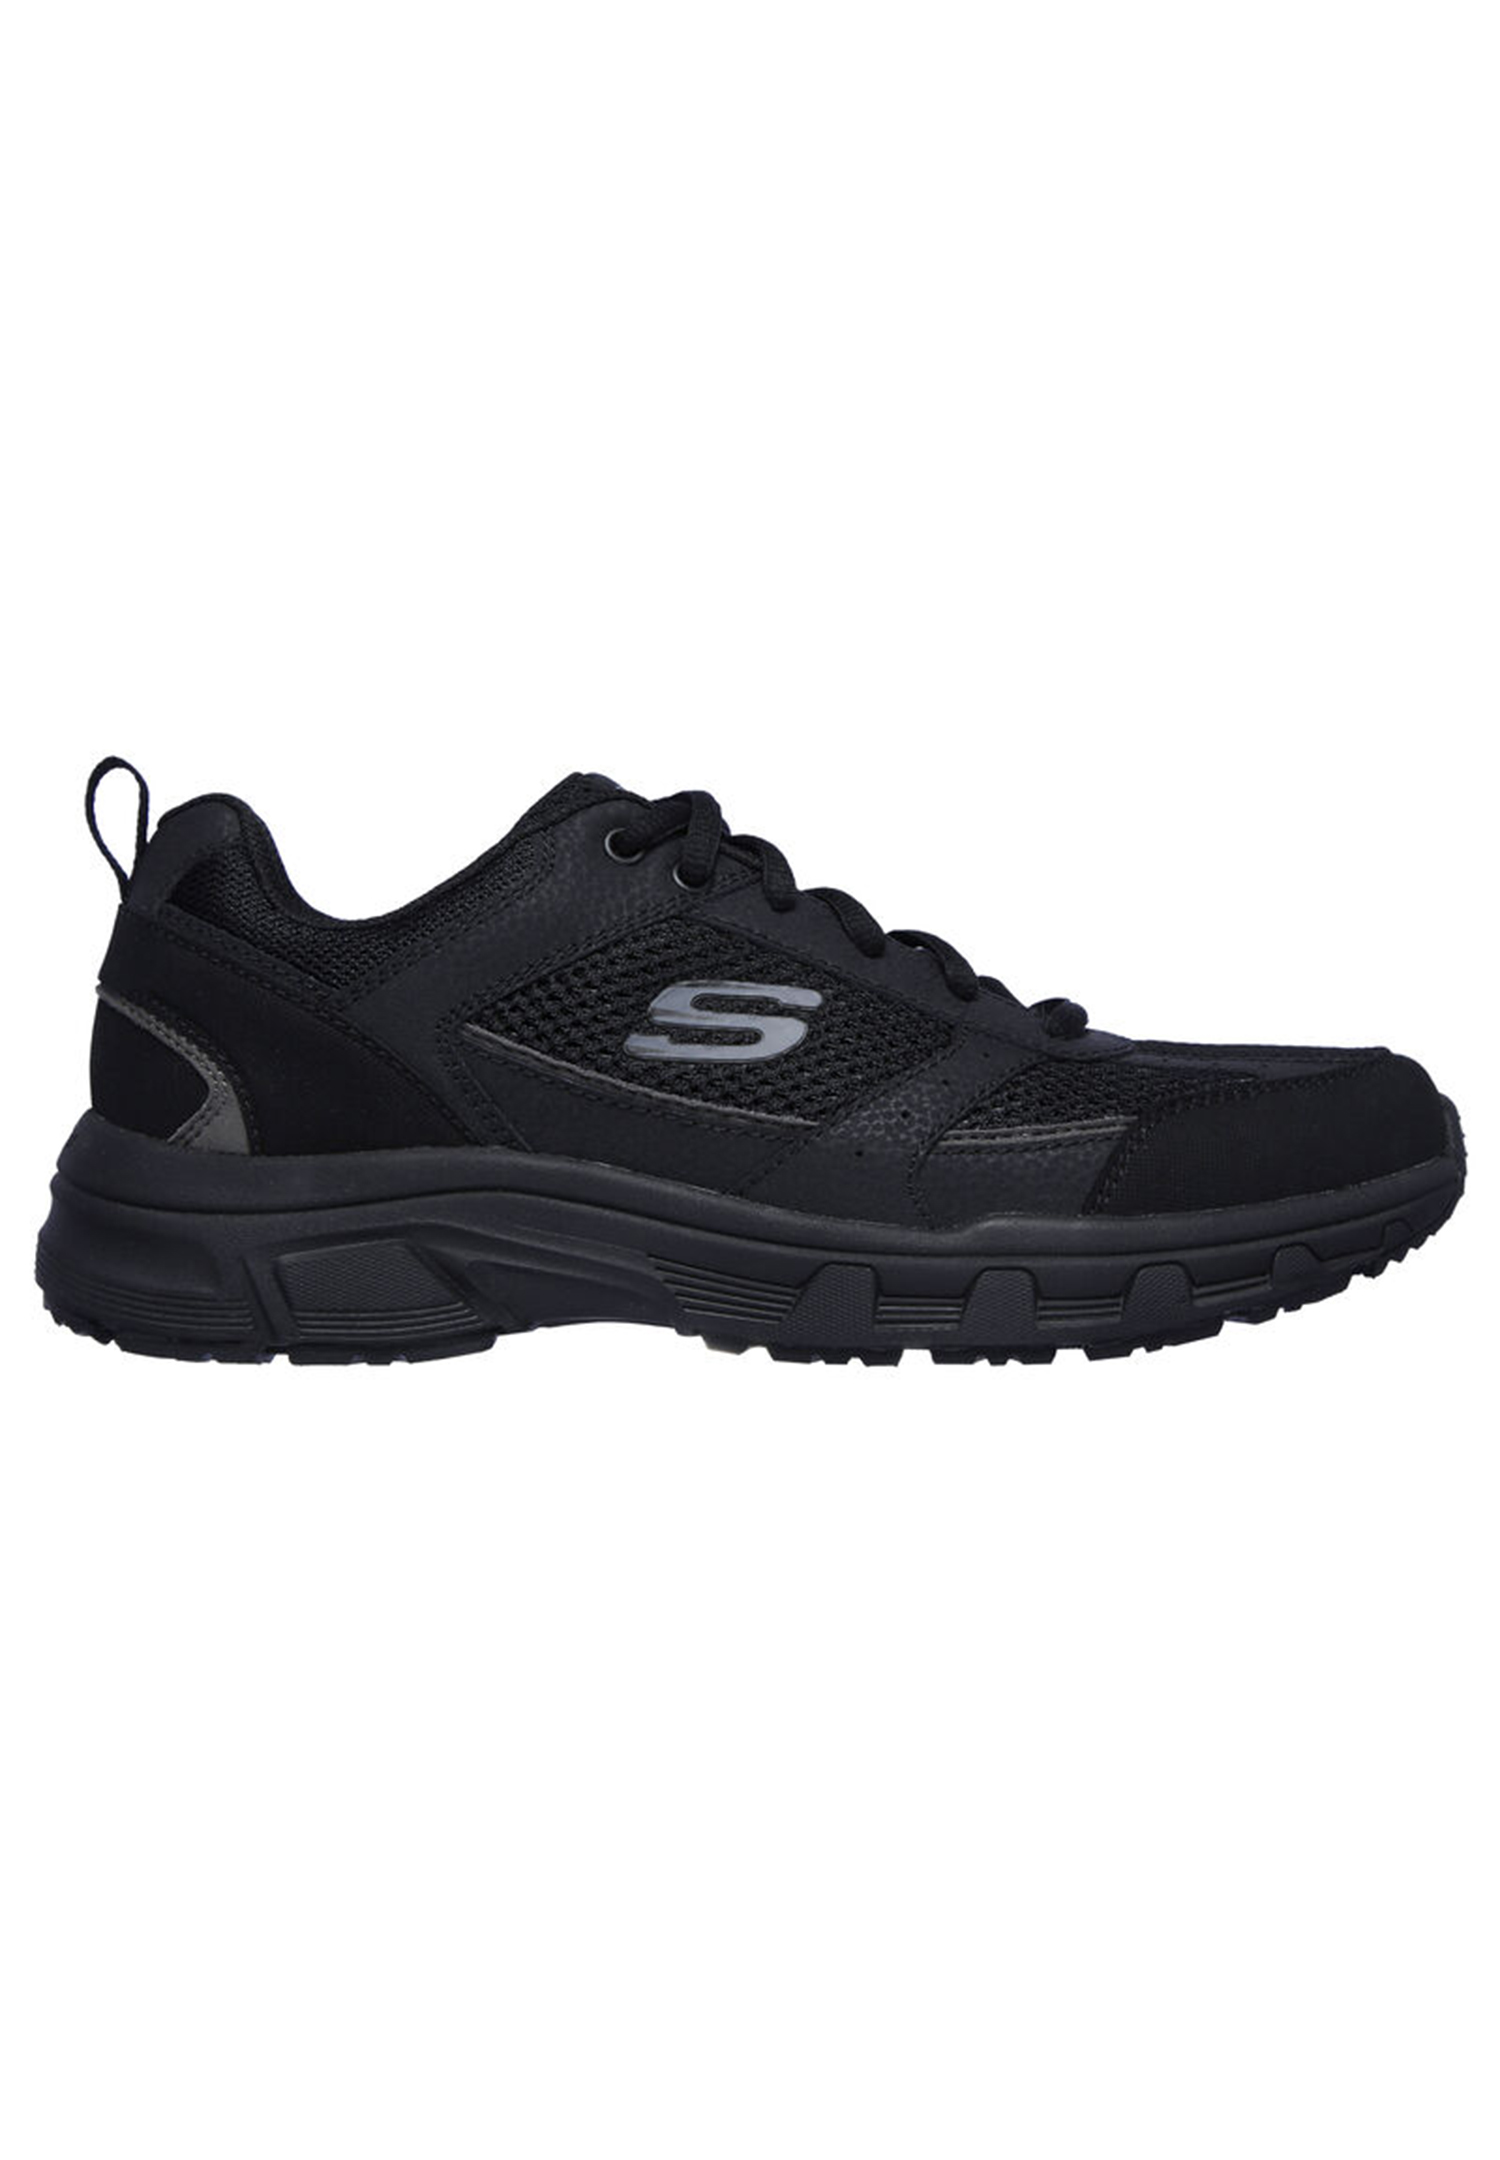 Skechers Outdoor Oak Canyon - VERKETTA Herren Sneaker 51898 Schwarz